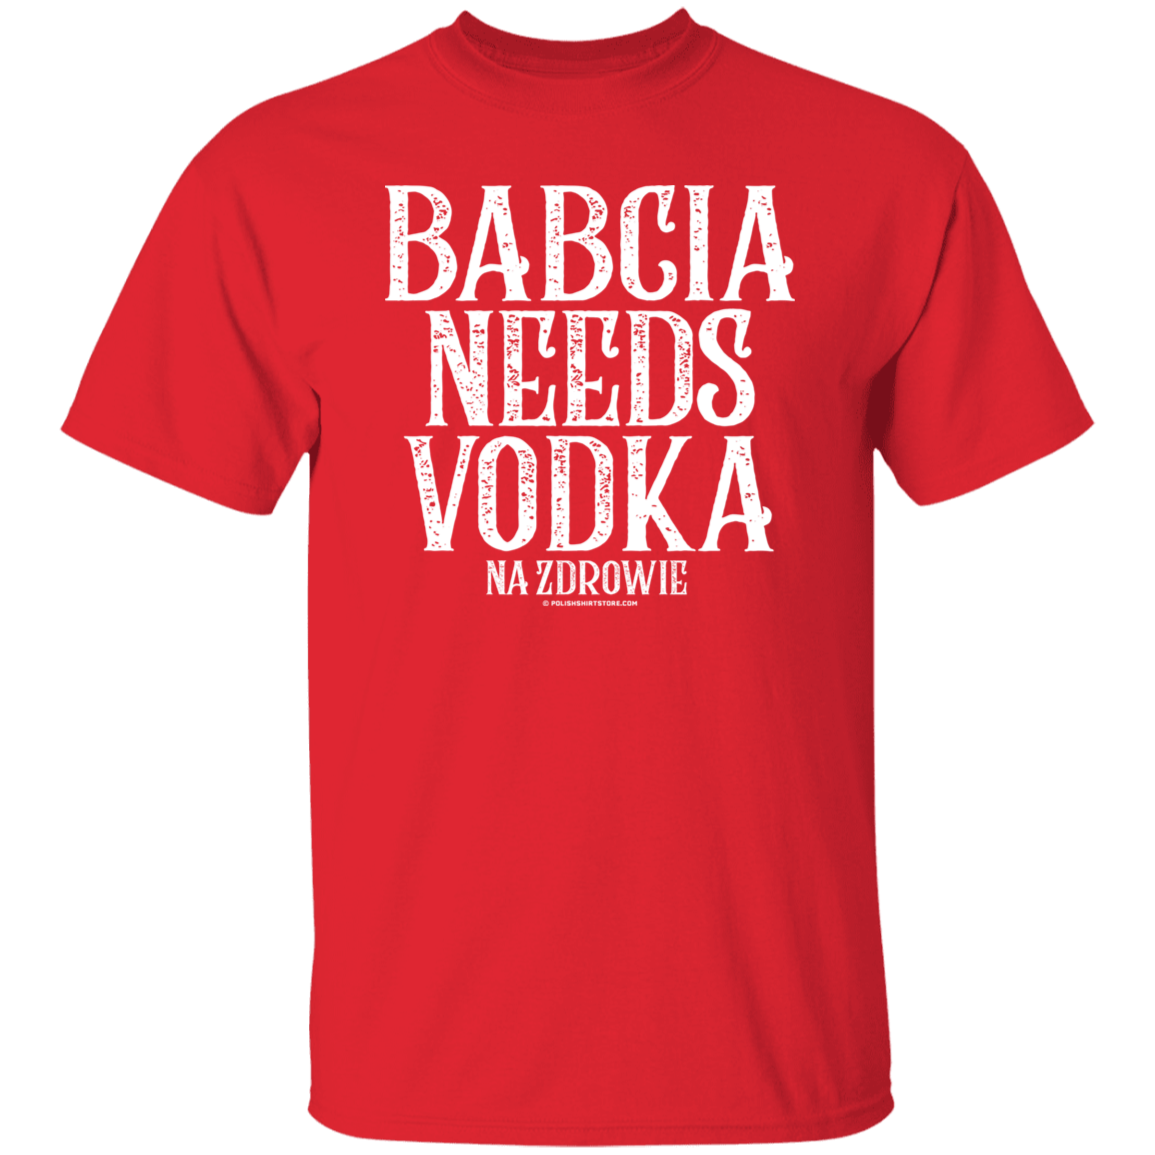 Babcia Needs Vodka Apparel CustomCat G500 5.3 oz. T-Shirt Red S